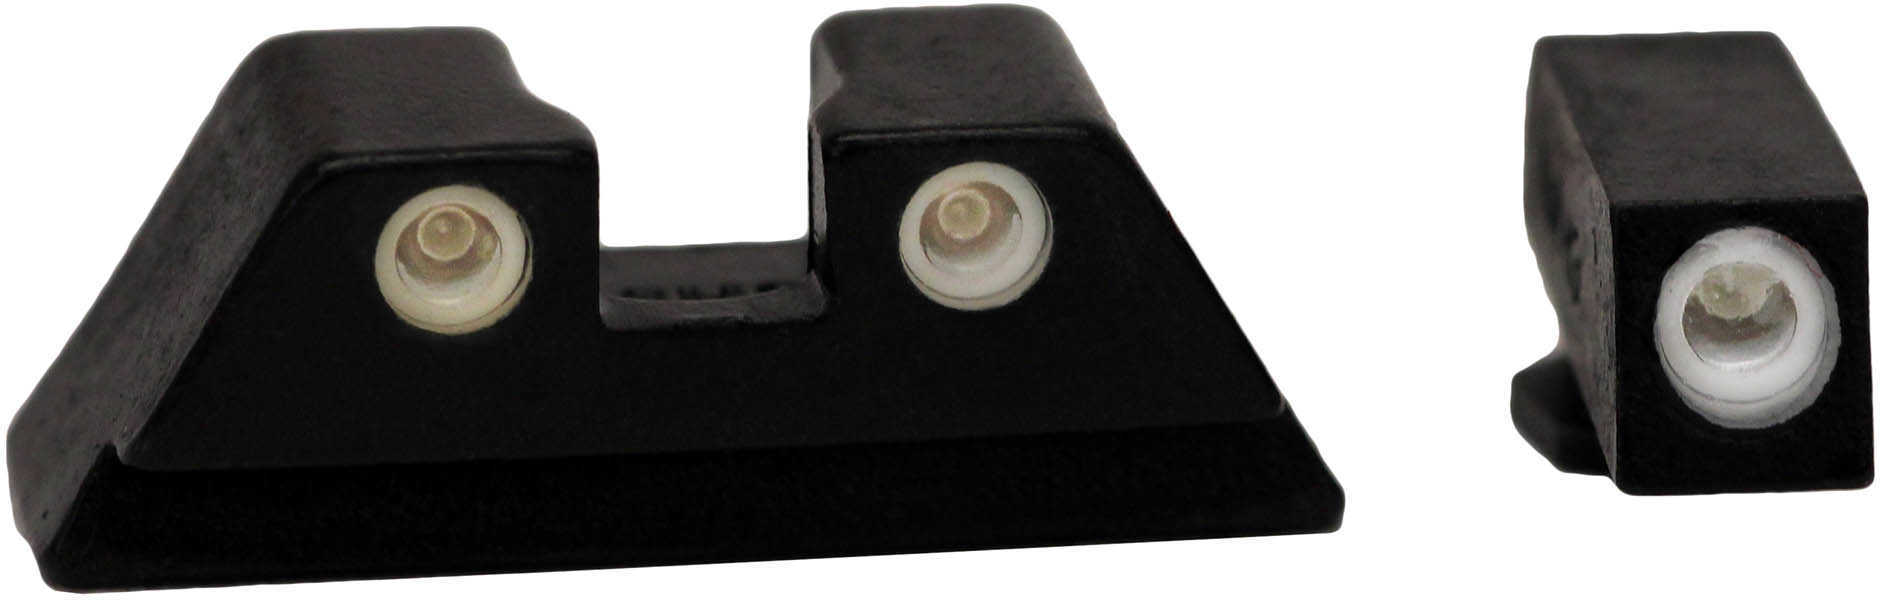 Mako Group for Glock - Tru-Dot Sights 10mm & .45 ACP , Green/Yellow, Fixed Set ML10222Y